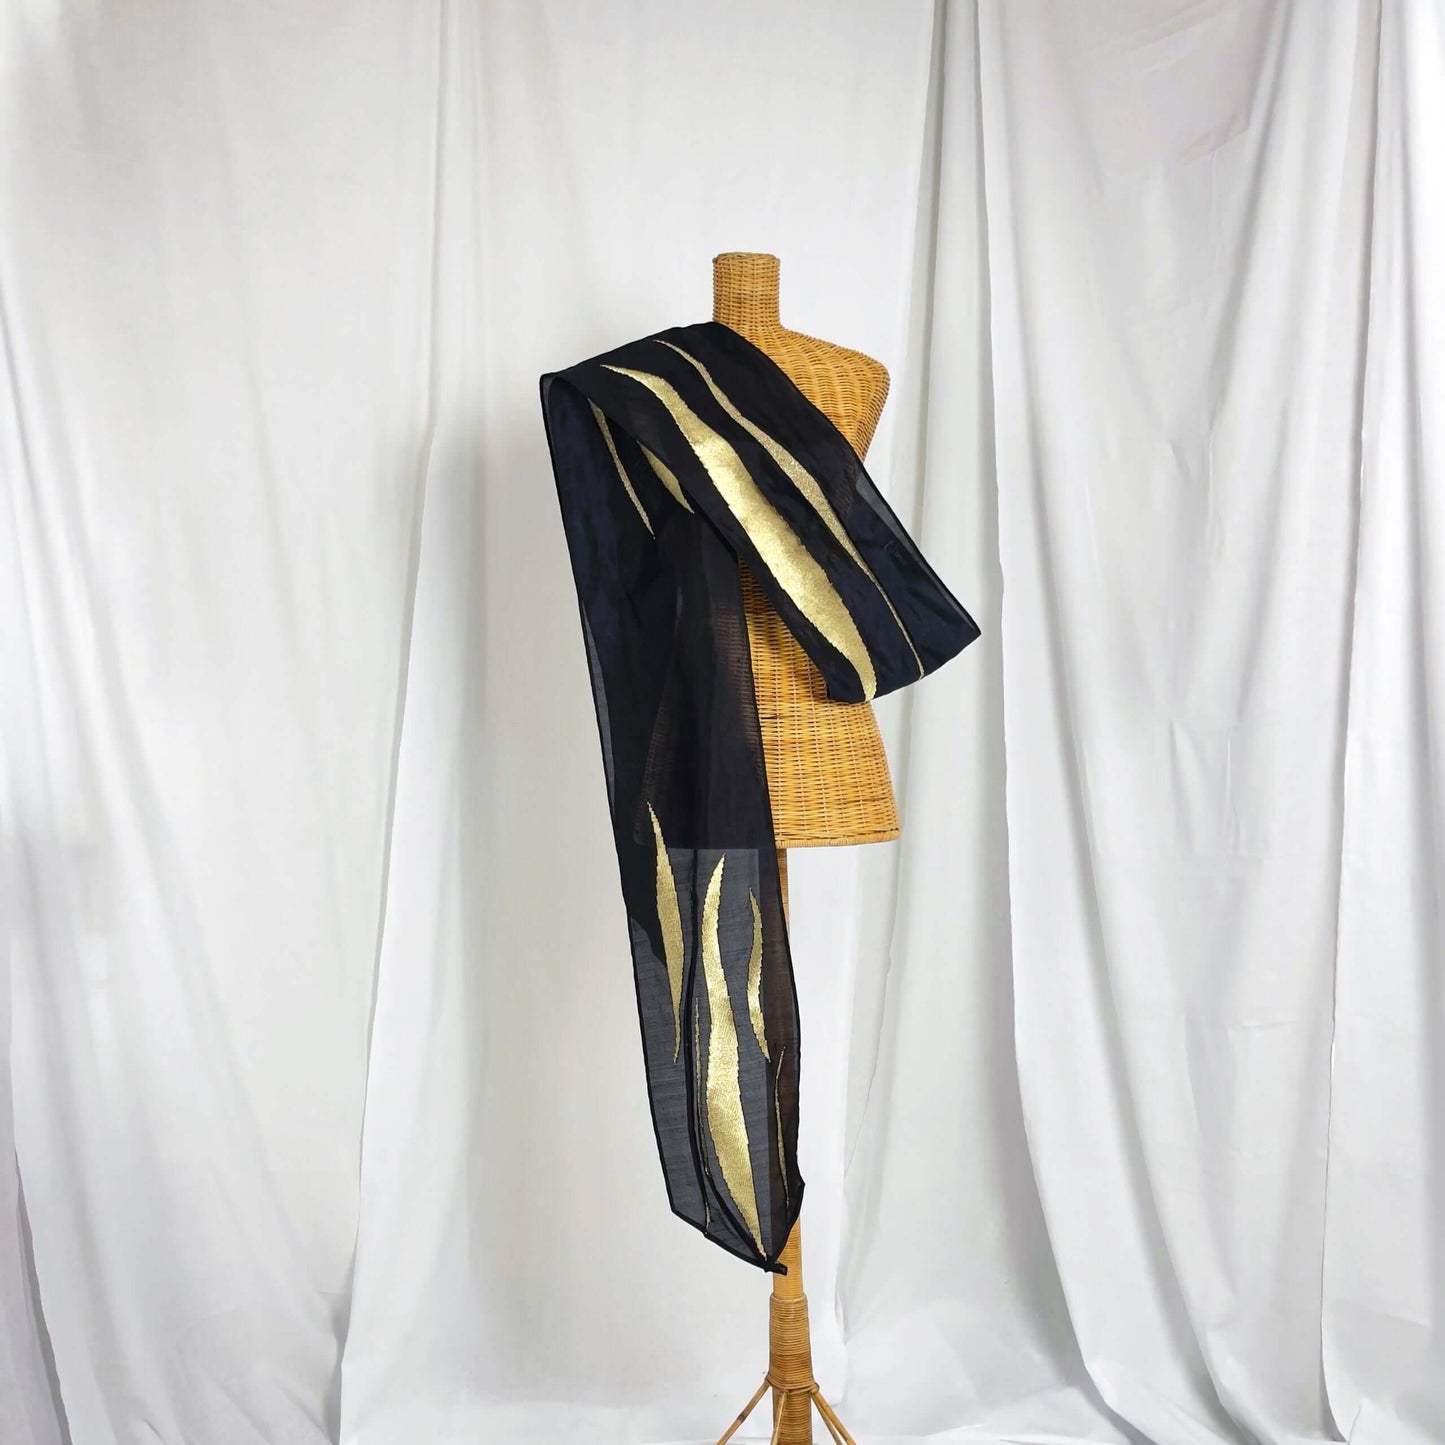 Selampai Emas handwoven silk songket shawl textile